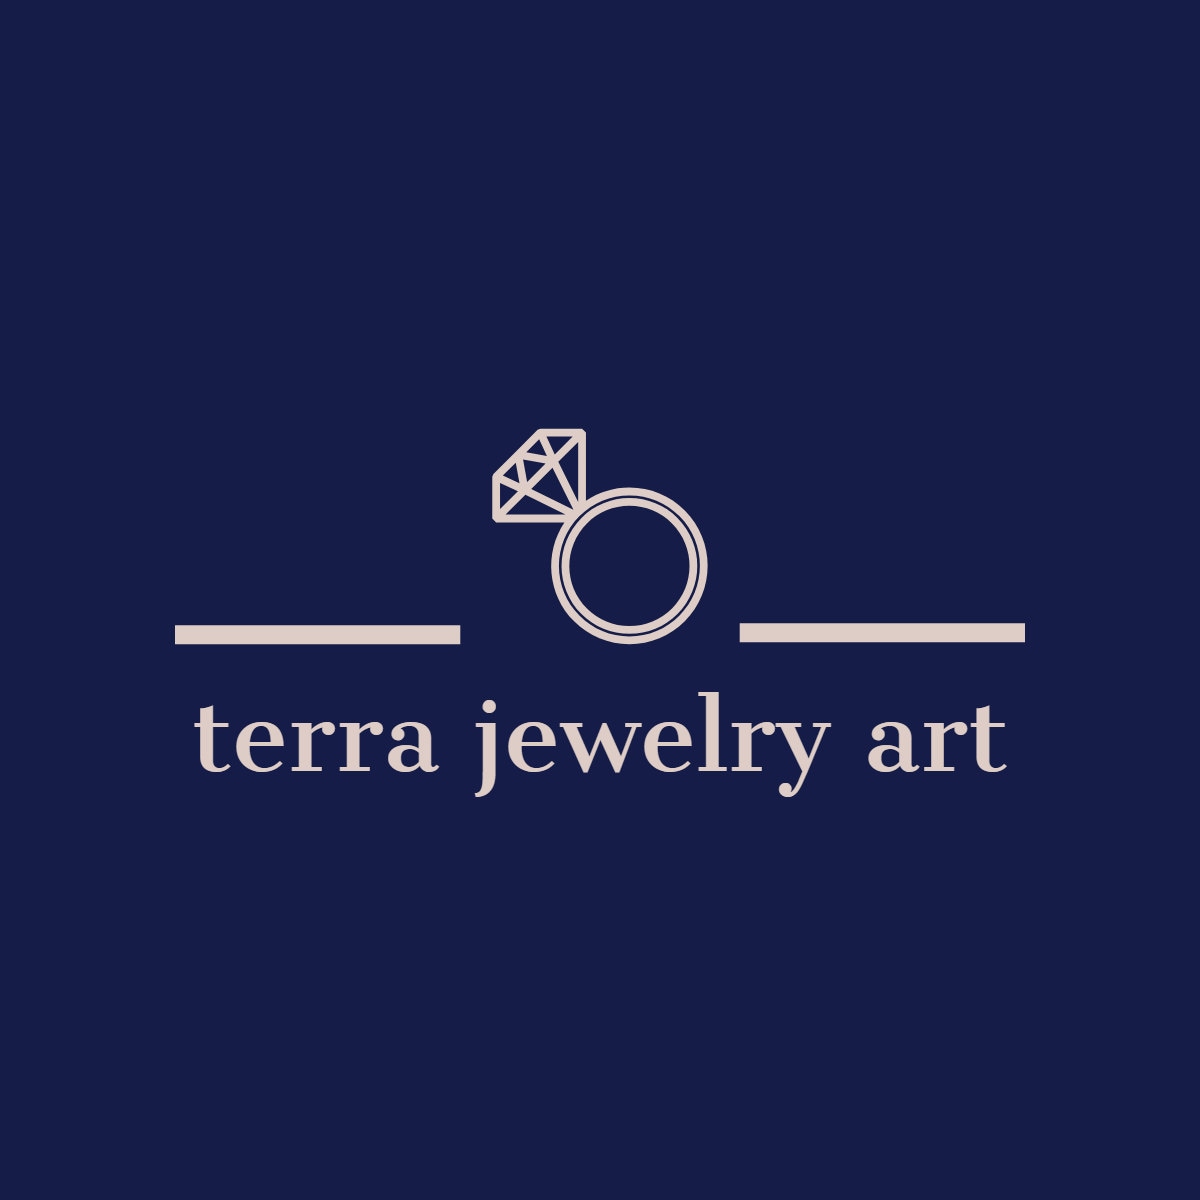 TerrajewelryArt - Etsy